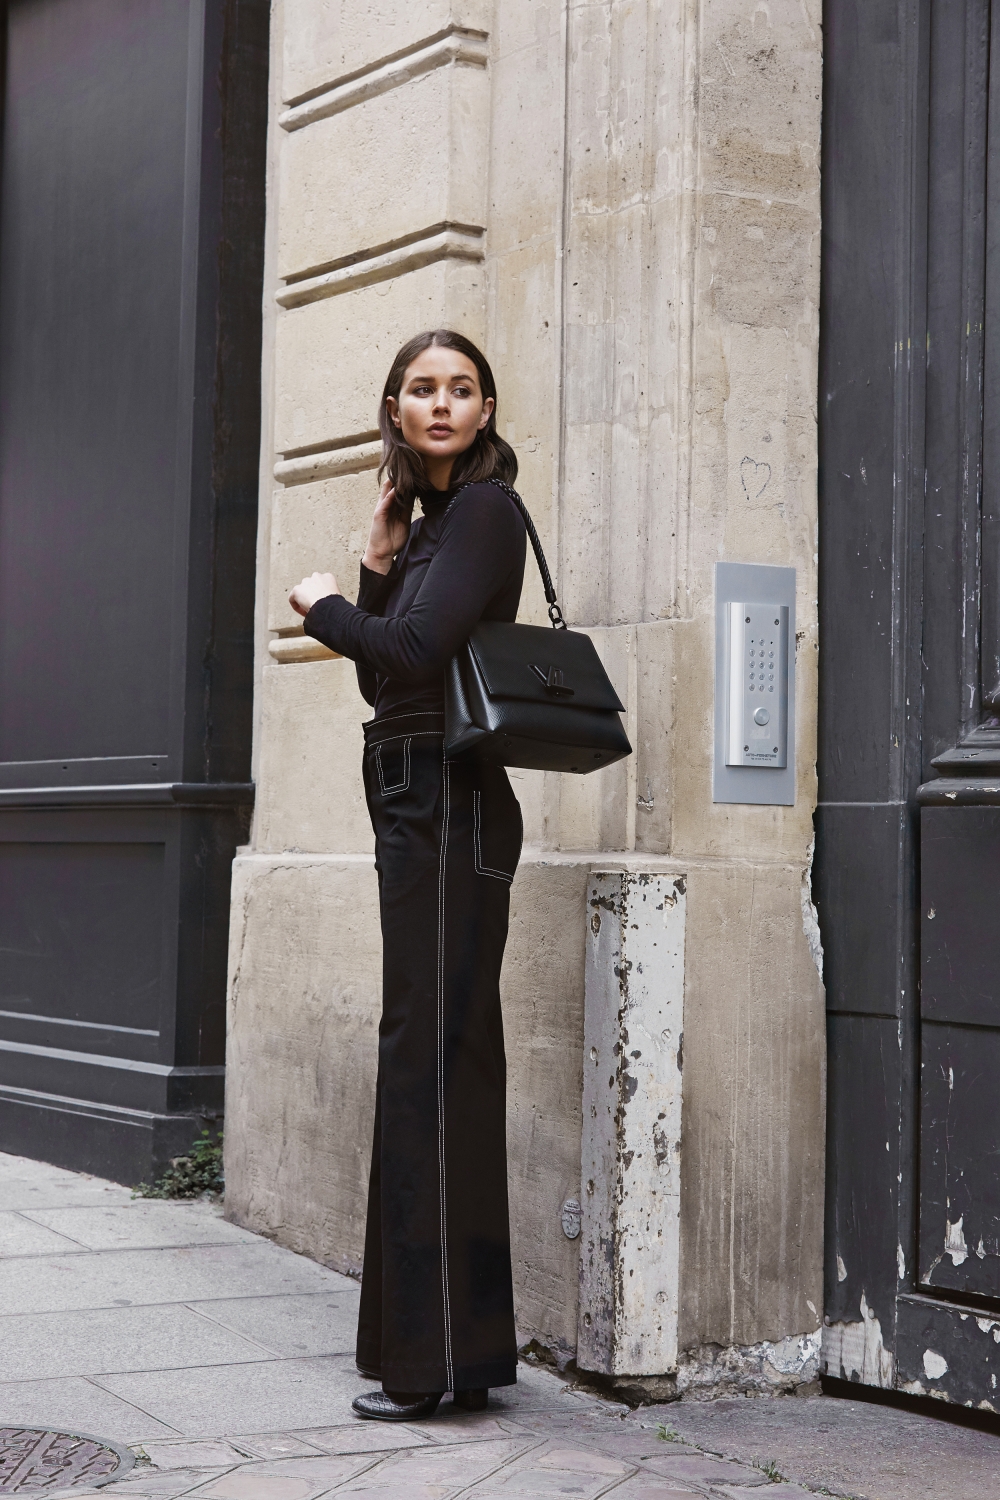 Louis Vuitton Black LV bag | All black outfits | Paris | Street Style | HarperandHarley